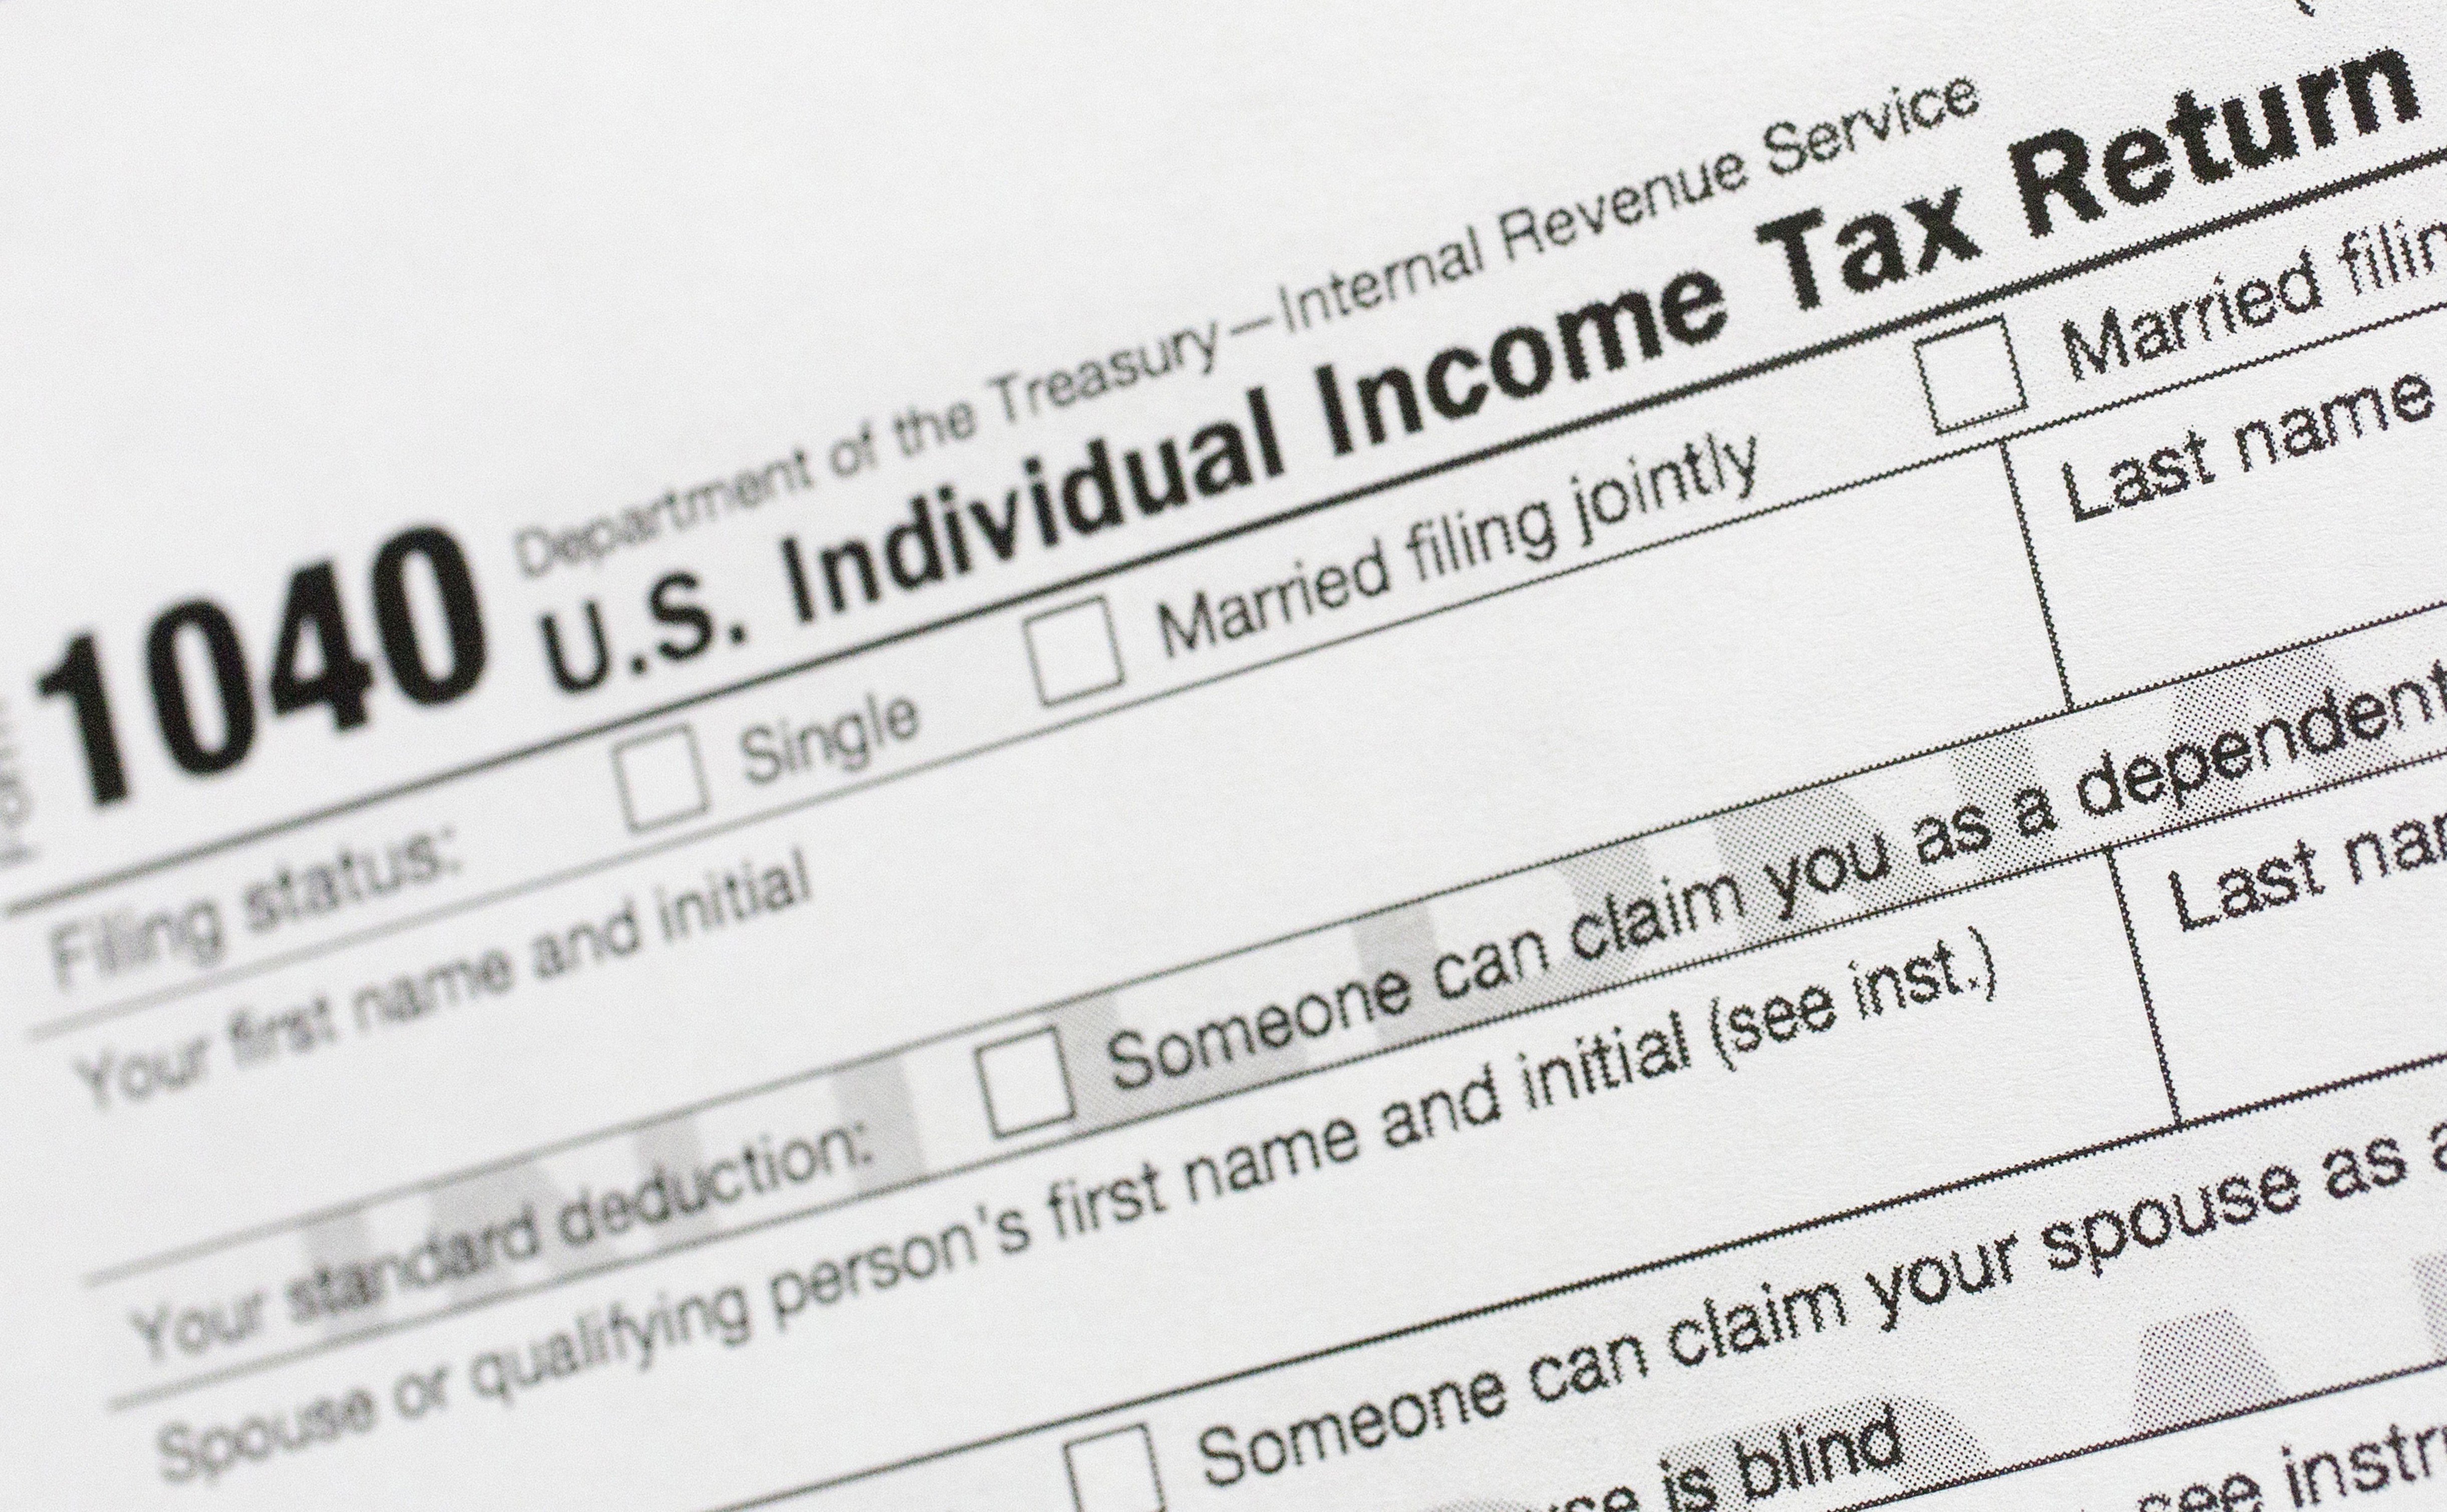 1040 U.S. Individual Income Tax Return form